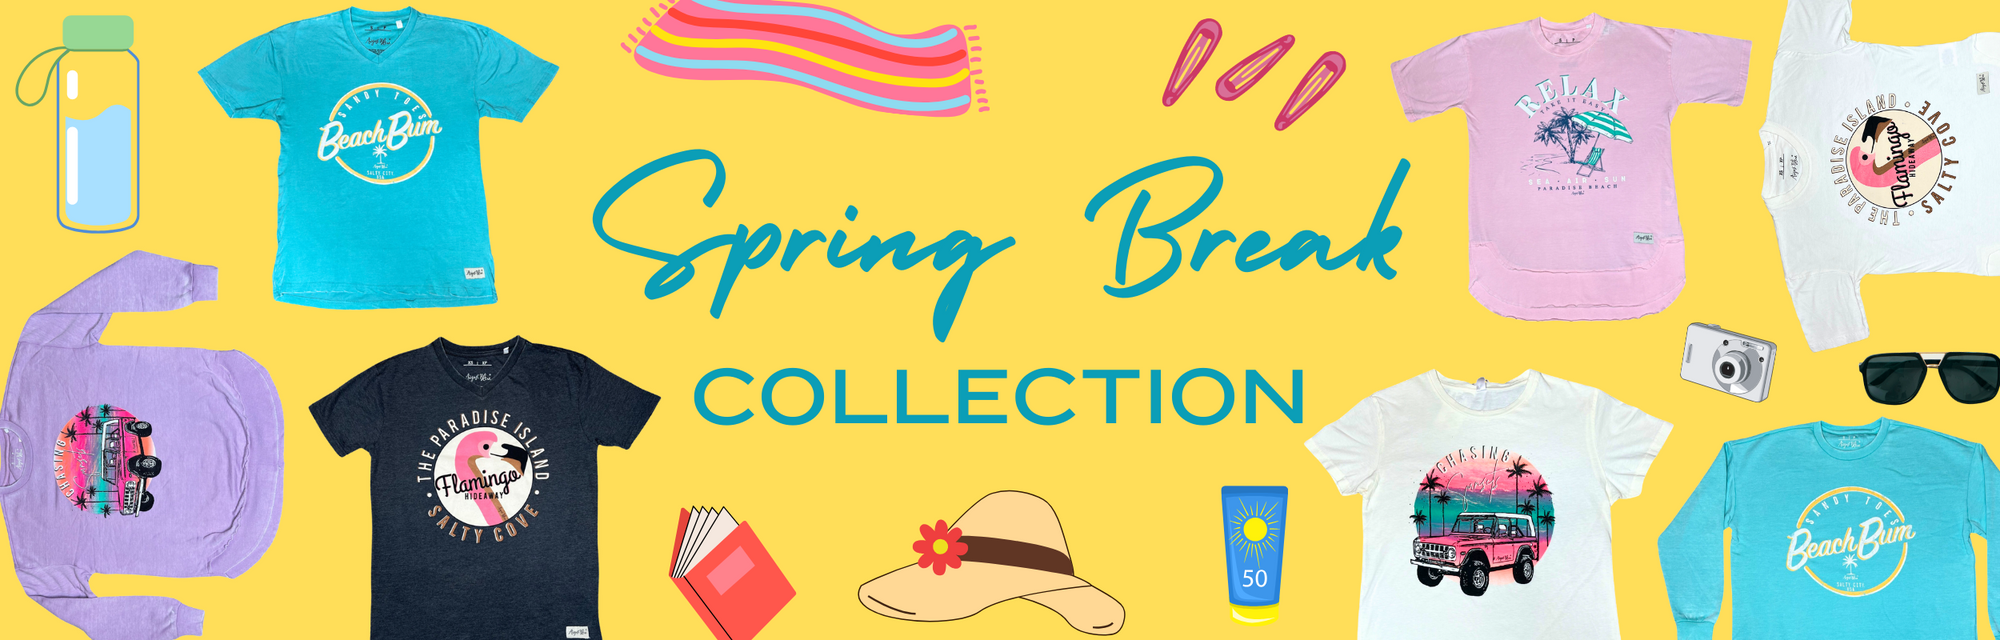 Spring Break Collection Banner